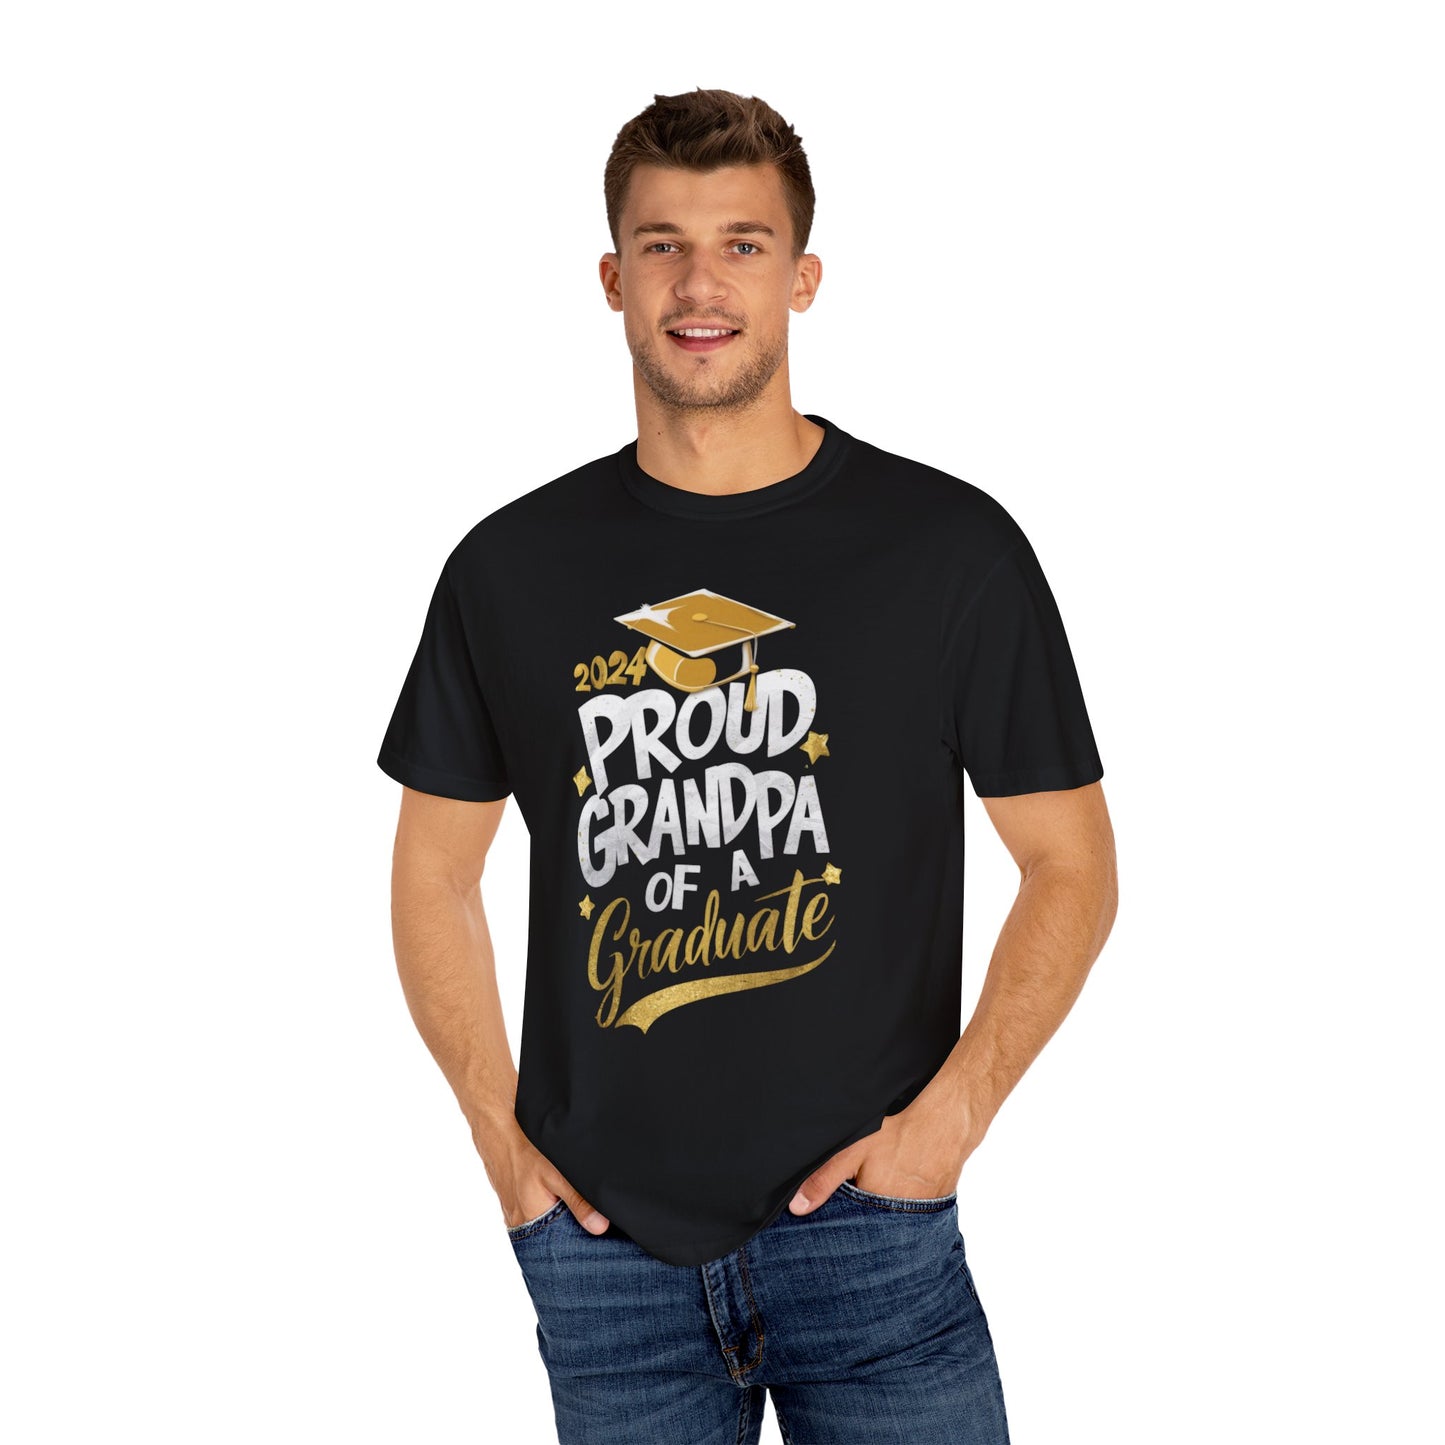 Proud Grandpa of a 2024 Graduate Unisex Garment-dyed T-shirt Cotton Funny Humorous Graphic Soft Premium Unisex Men Women Black T-shirt Birthday Gift-18